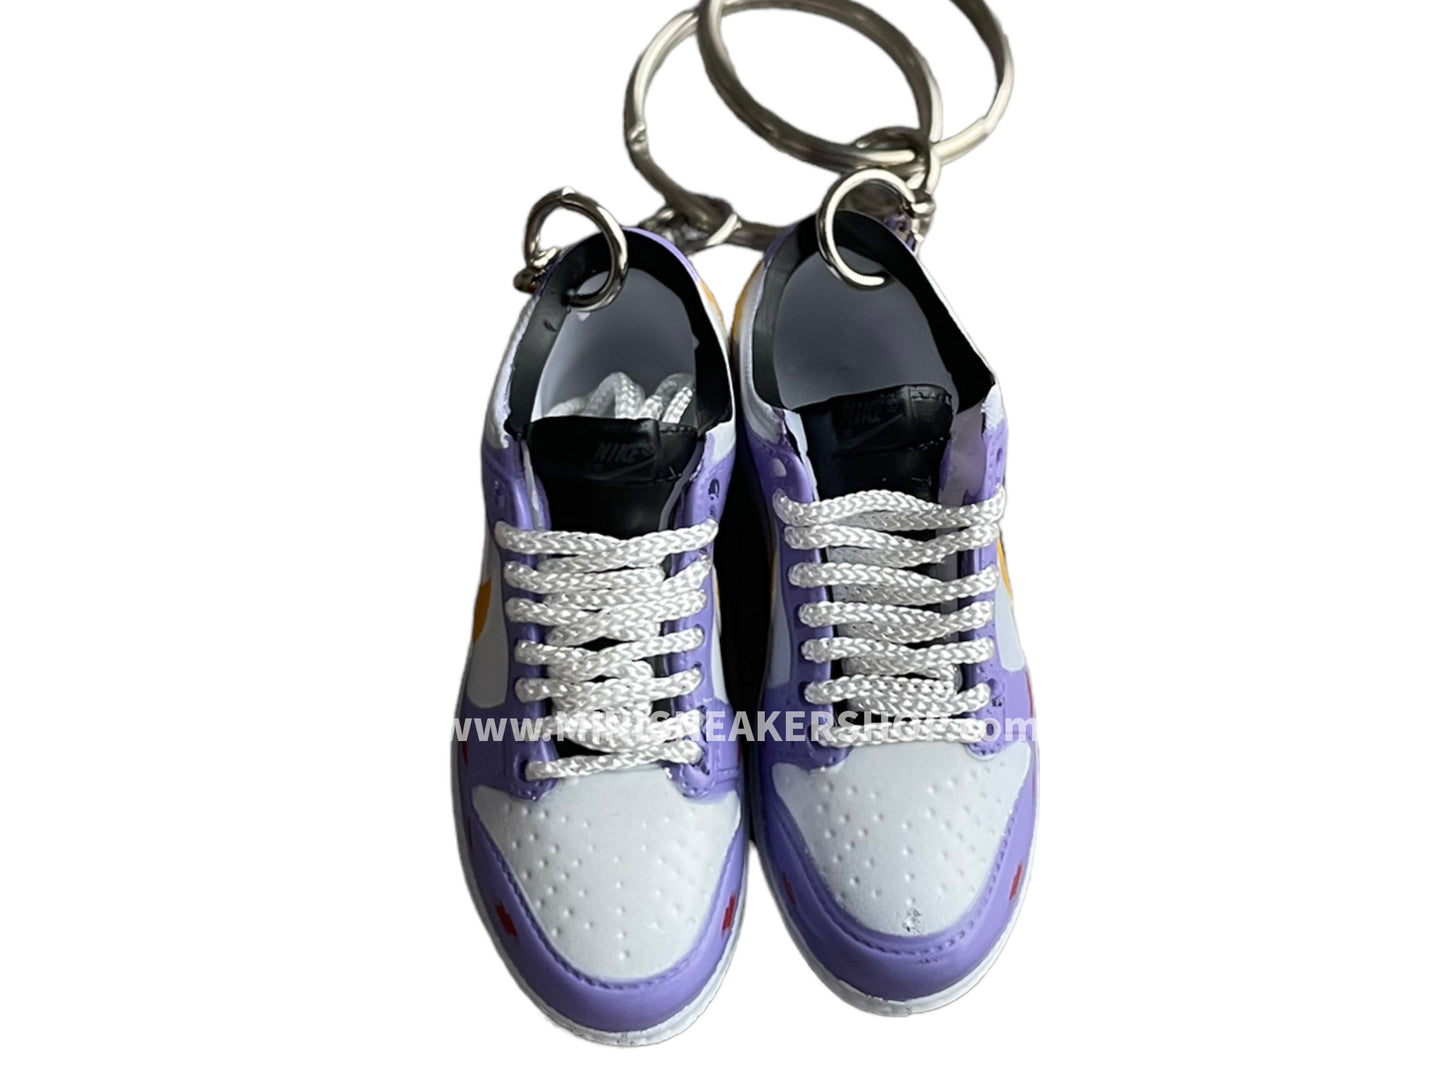 Mini sneaker keychain 3D Dunk - Cartoon Lavender